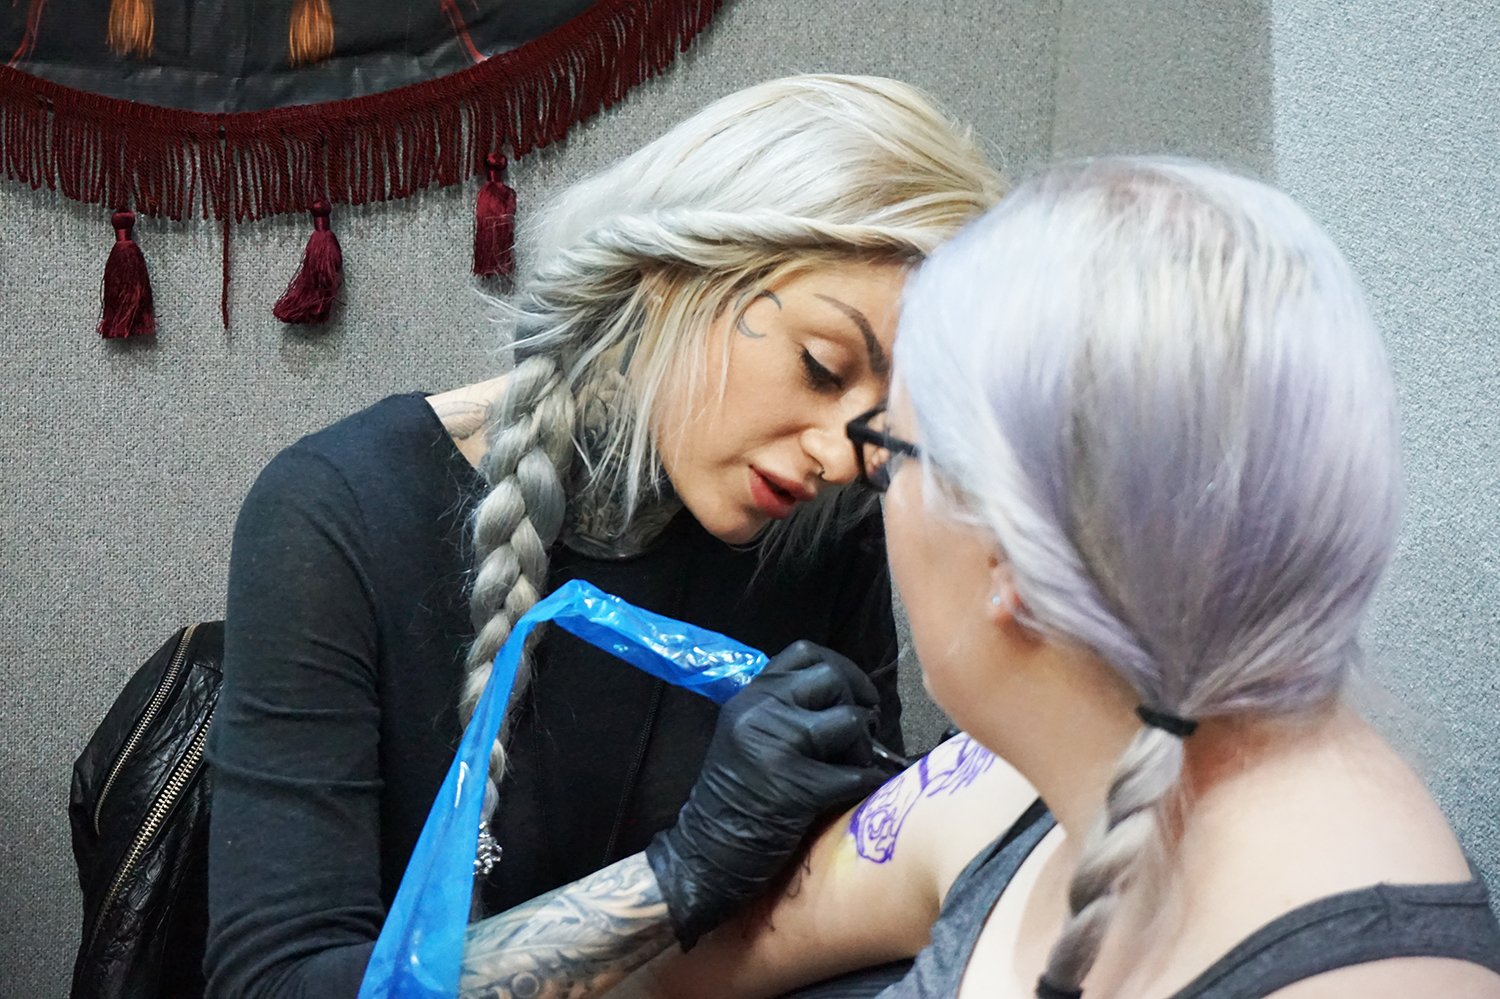 ryan ashley marakey tattooing arm at convention